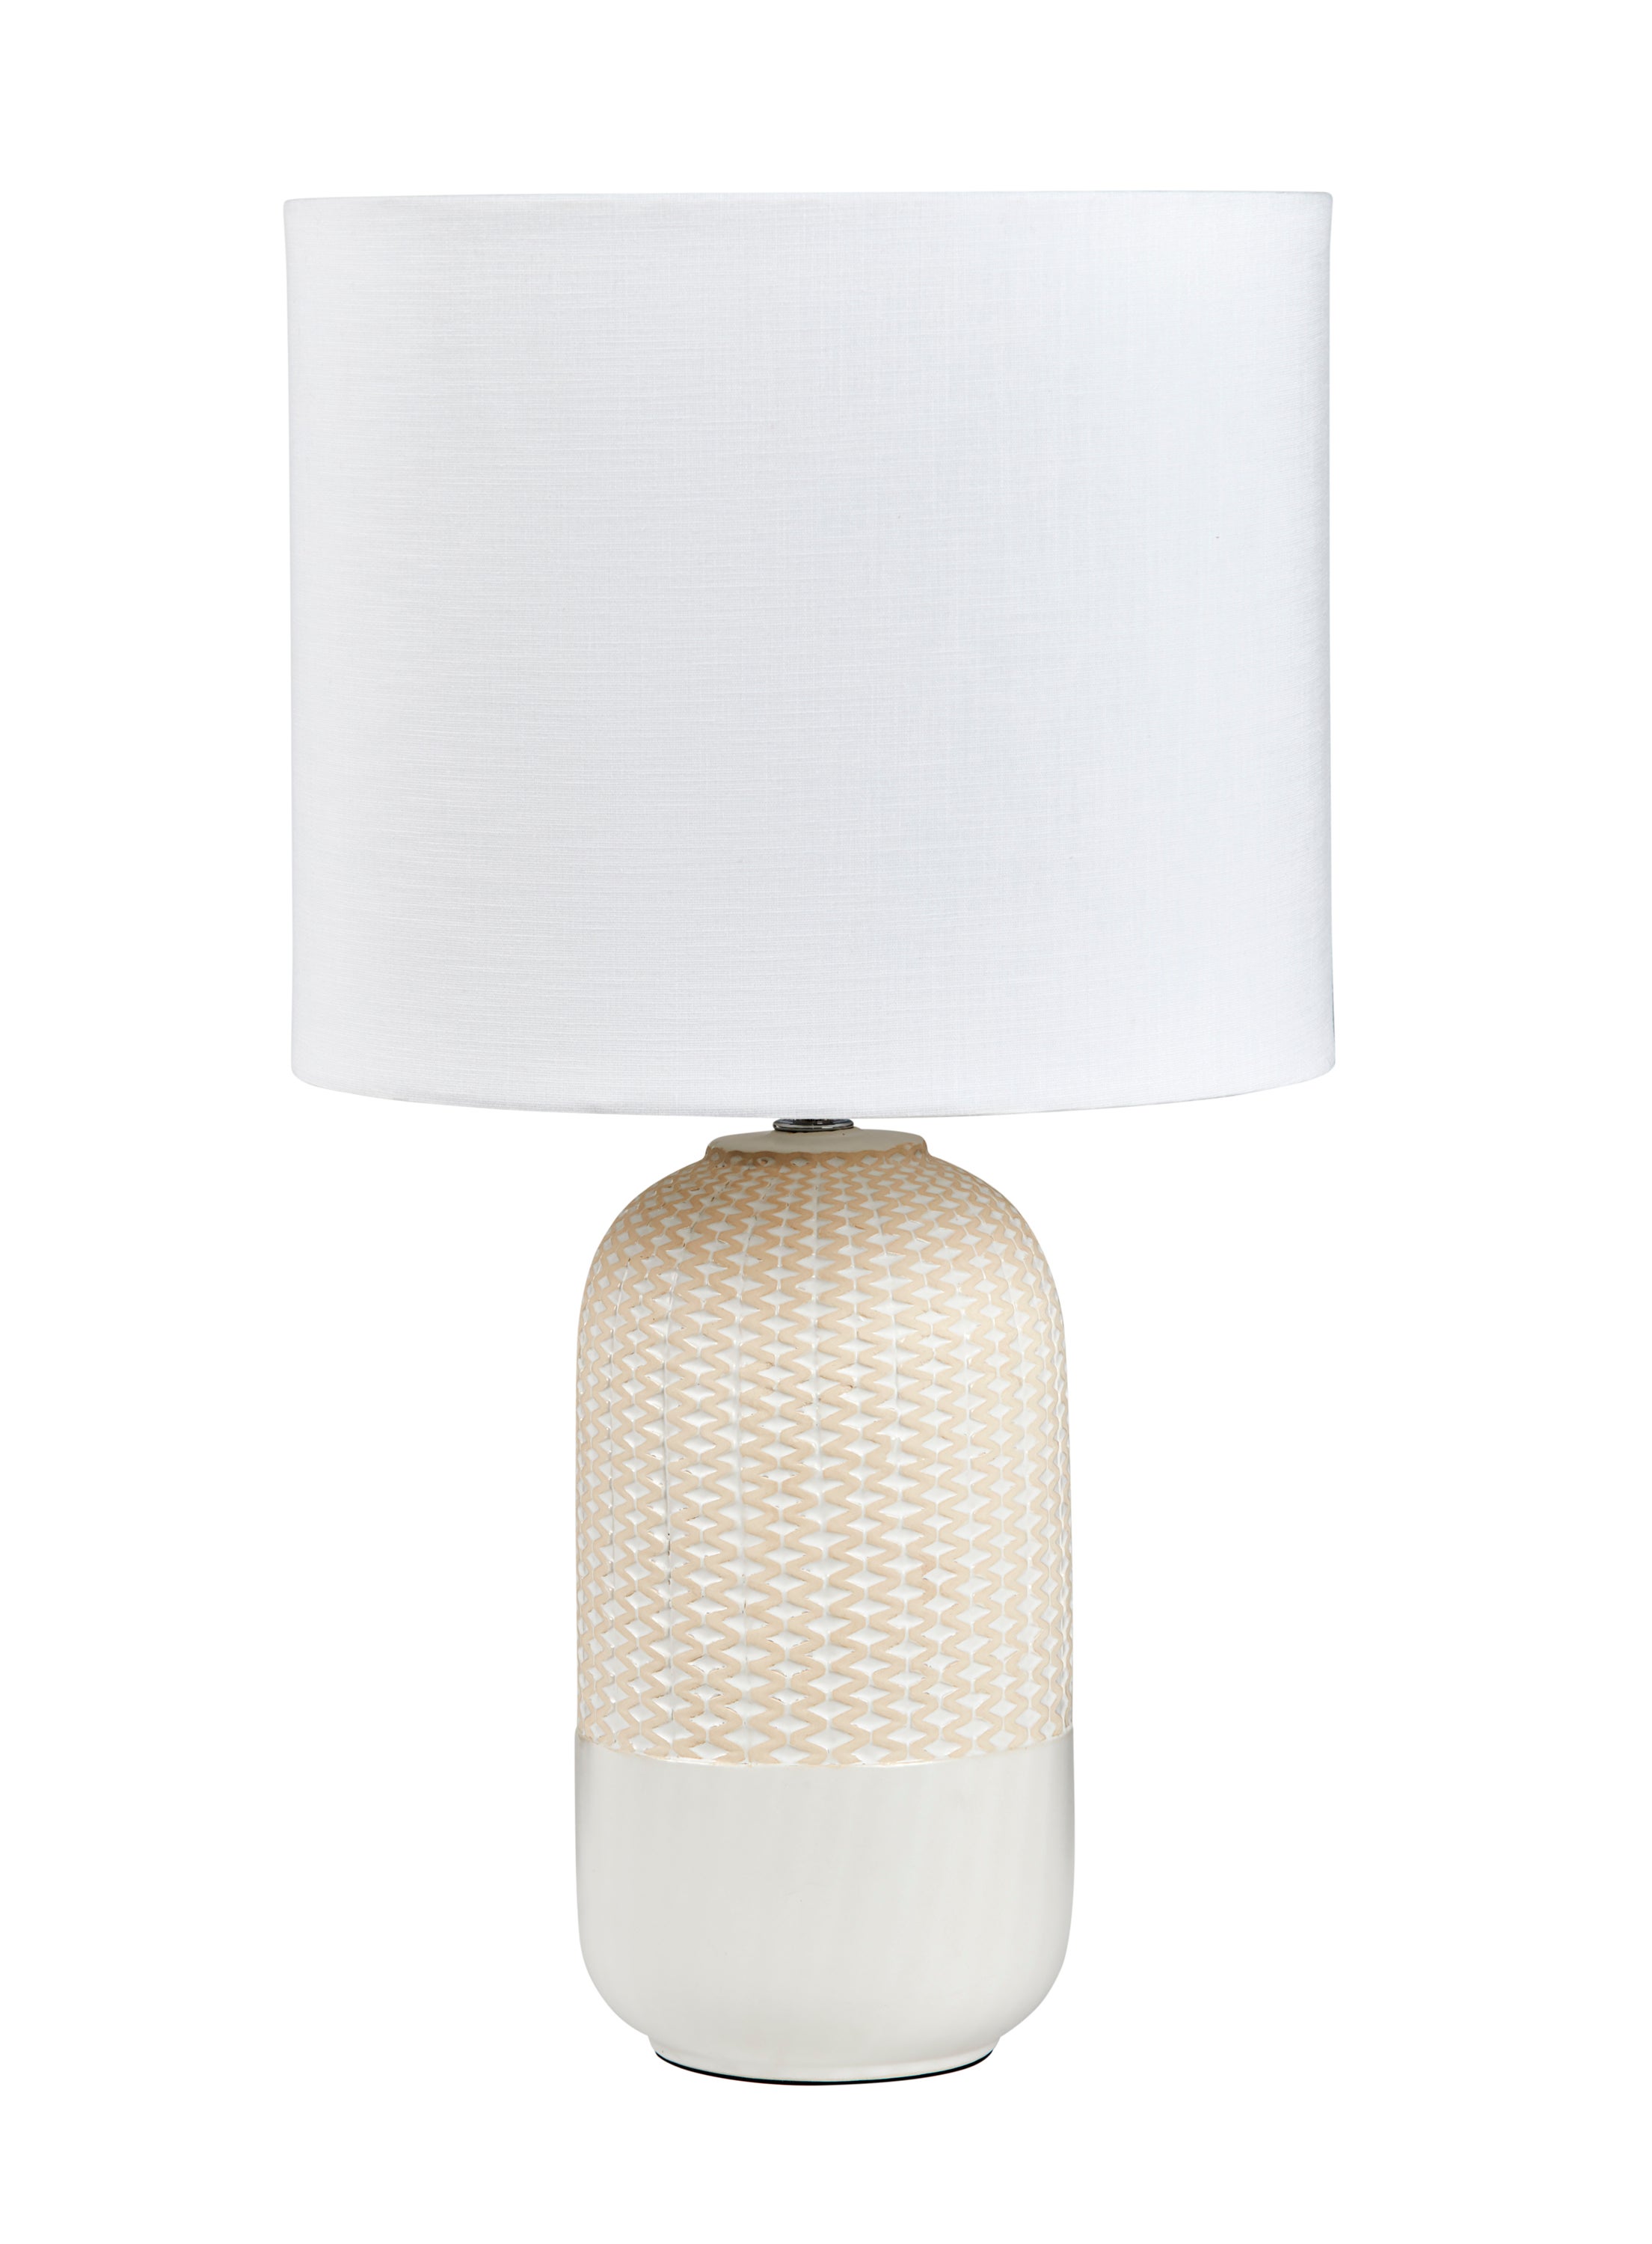 Amalfi River Table Lamp Bedside Lamp for Living Room Bedroom White/Natural